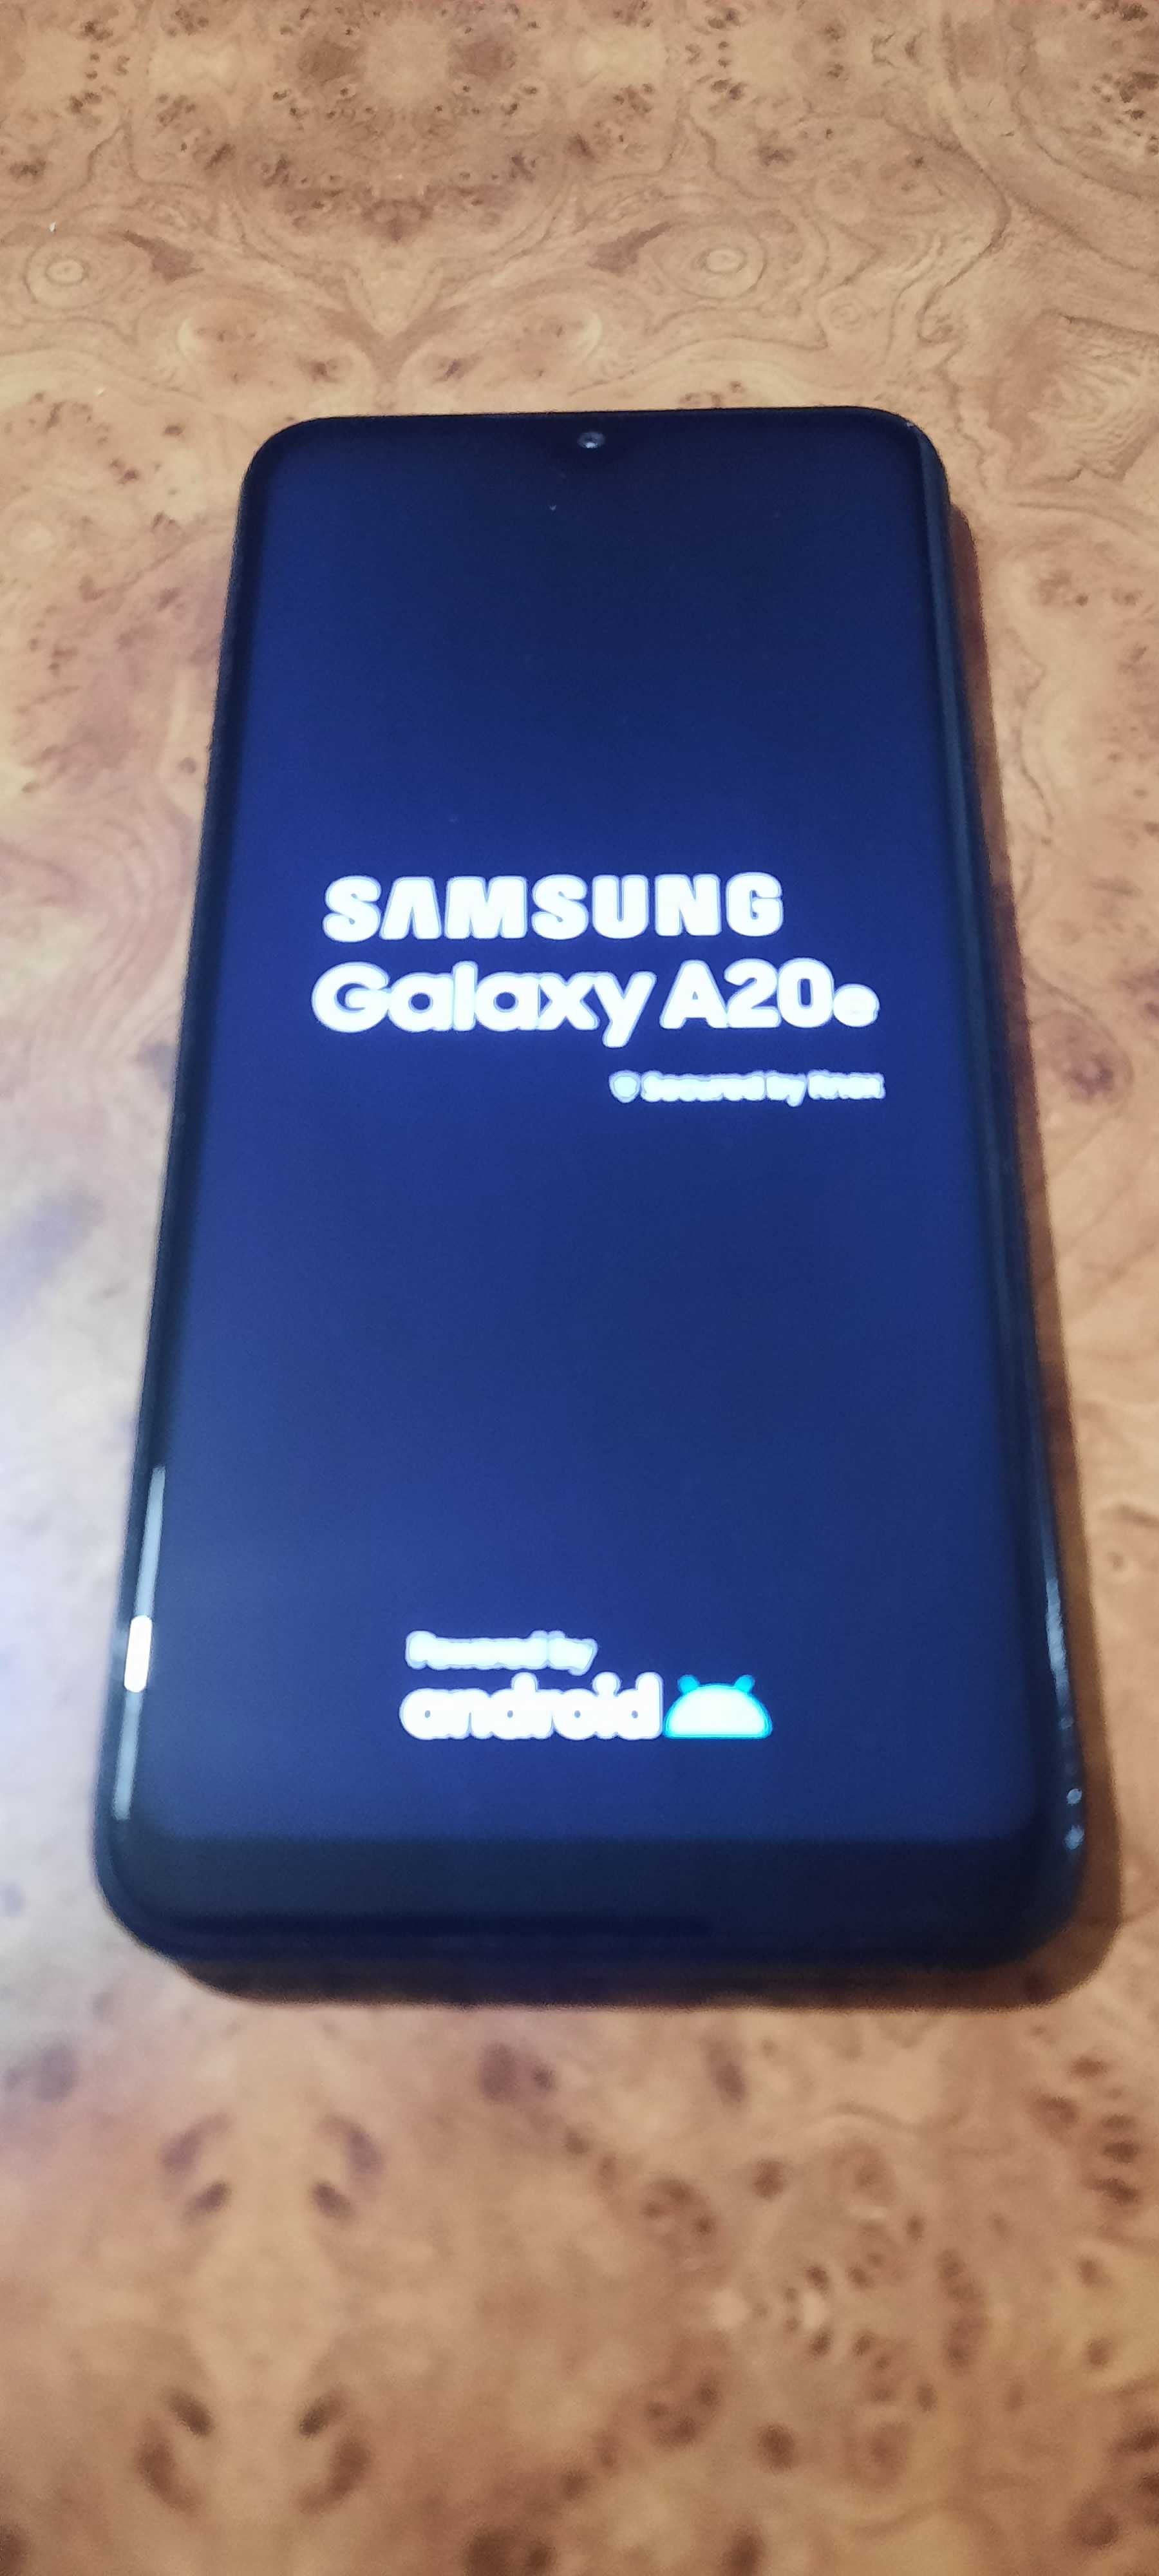 Samsung galaxy A20e